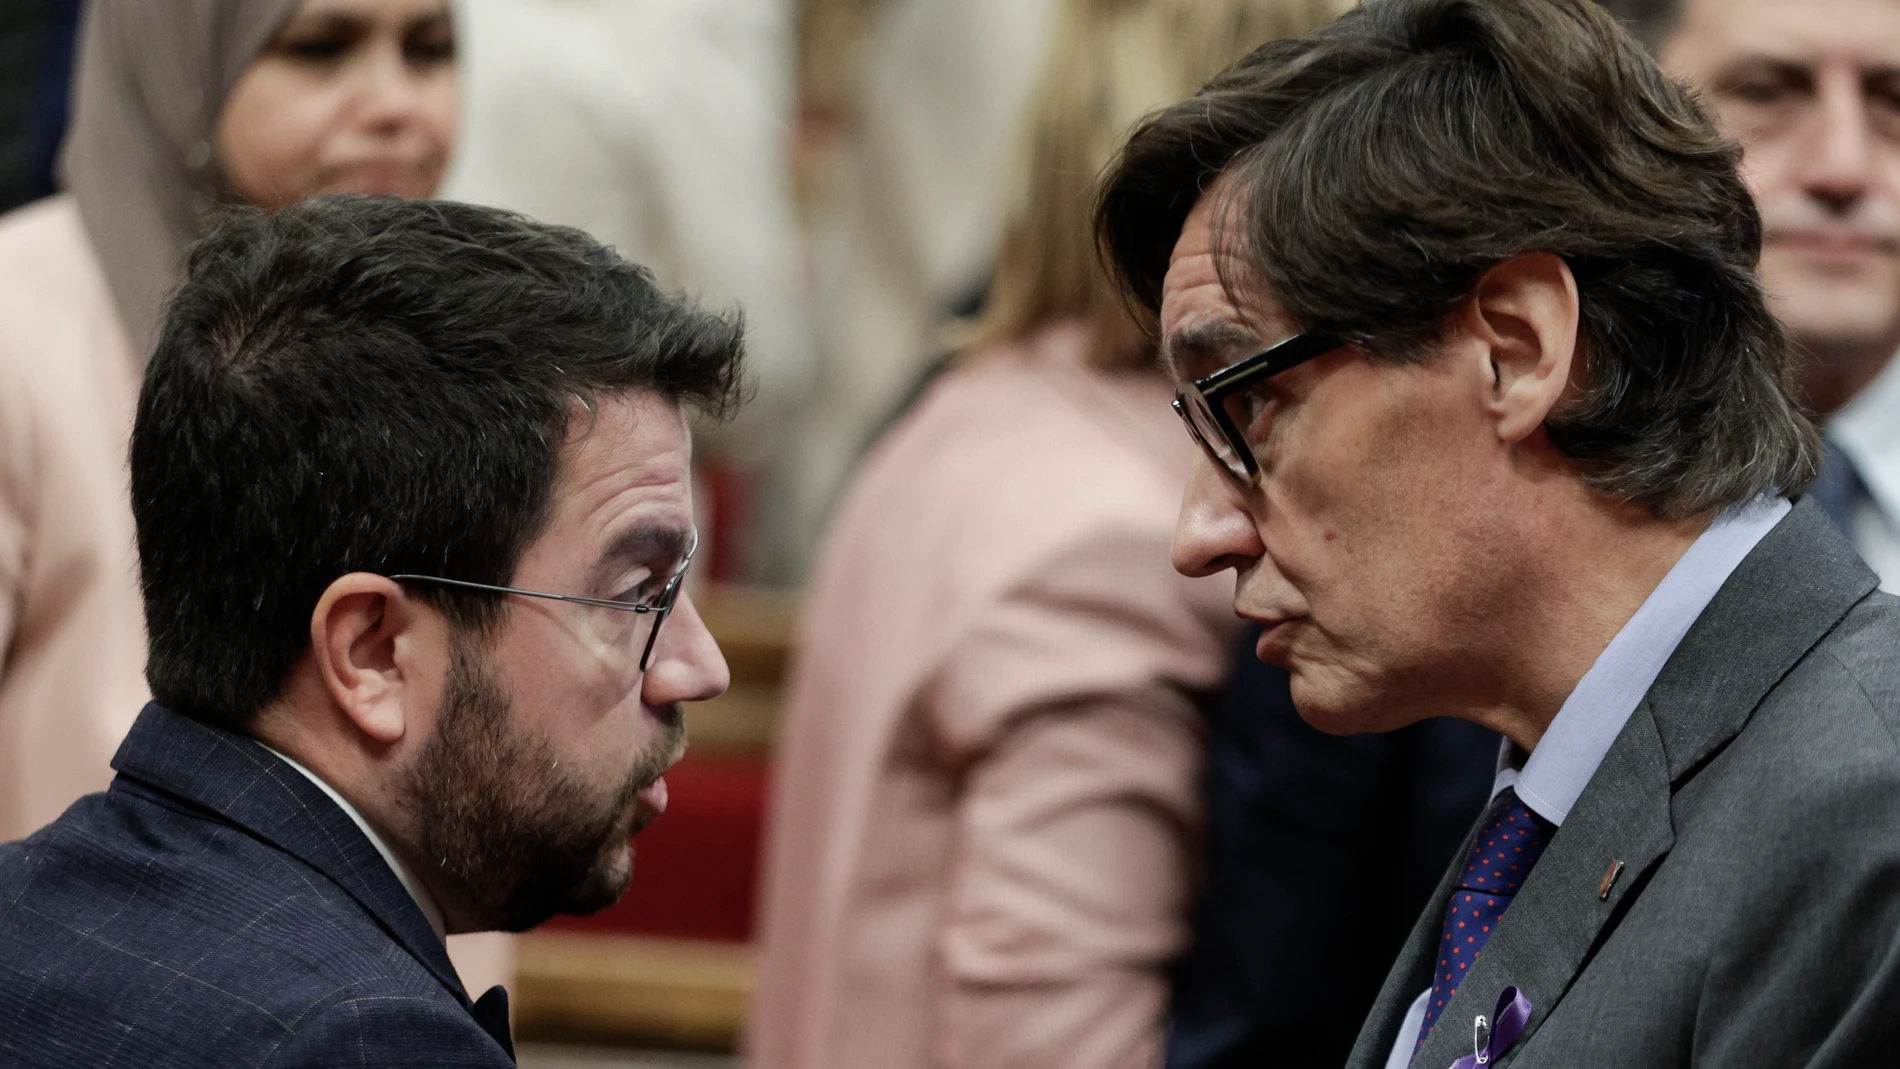 Pere Aragonès y Salvador Illa dialogan en el Parlament de Cataluña